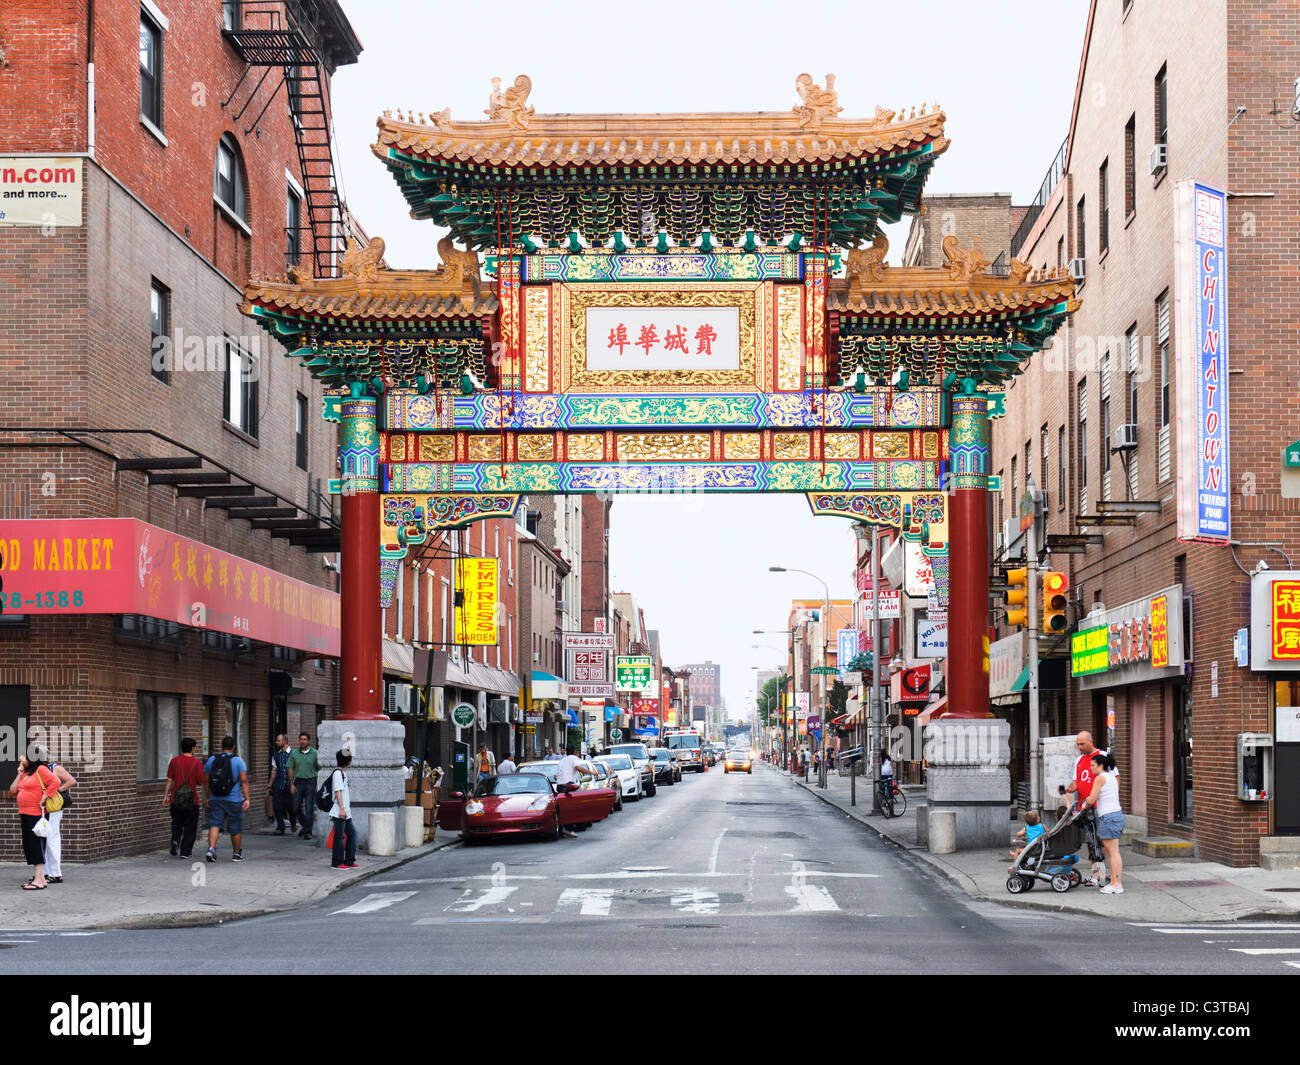 Chinatown Friendship Arch, Philadelphia Stock Photo